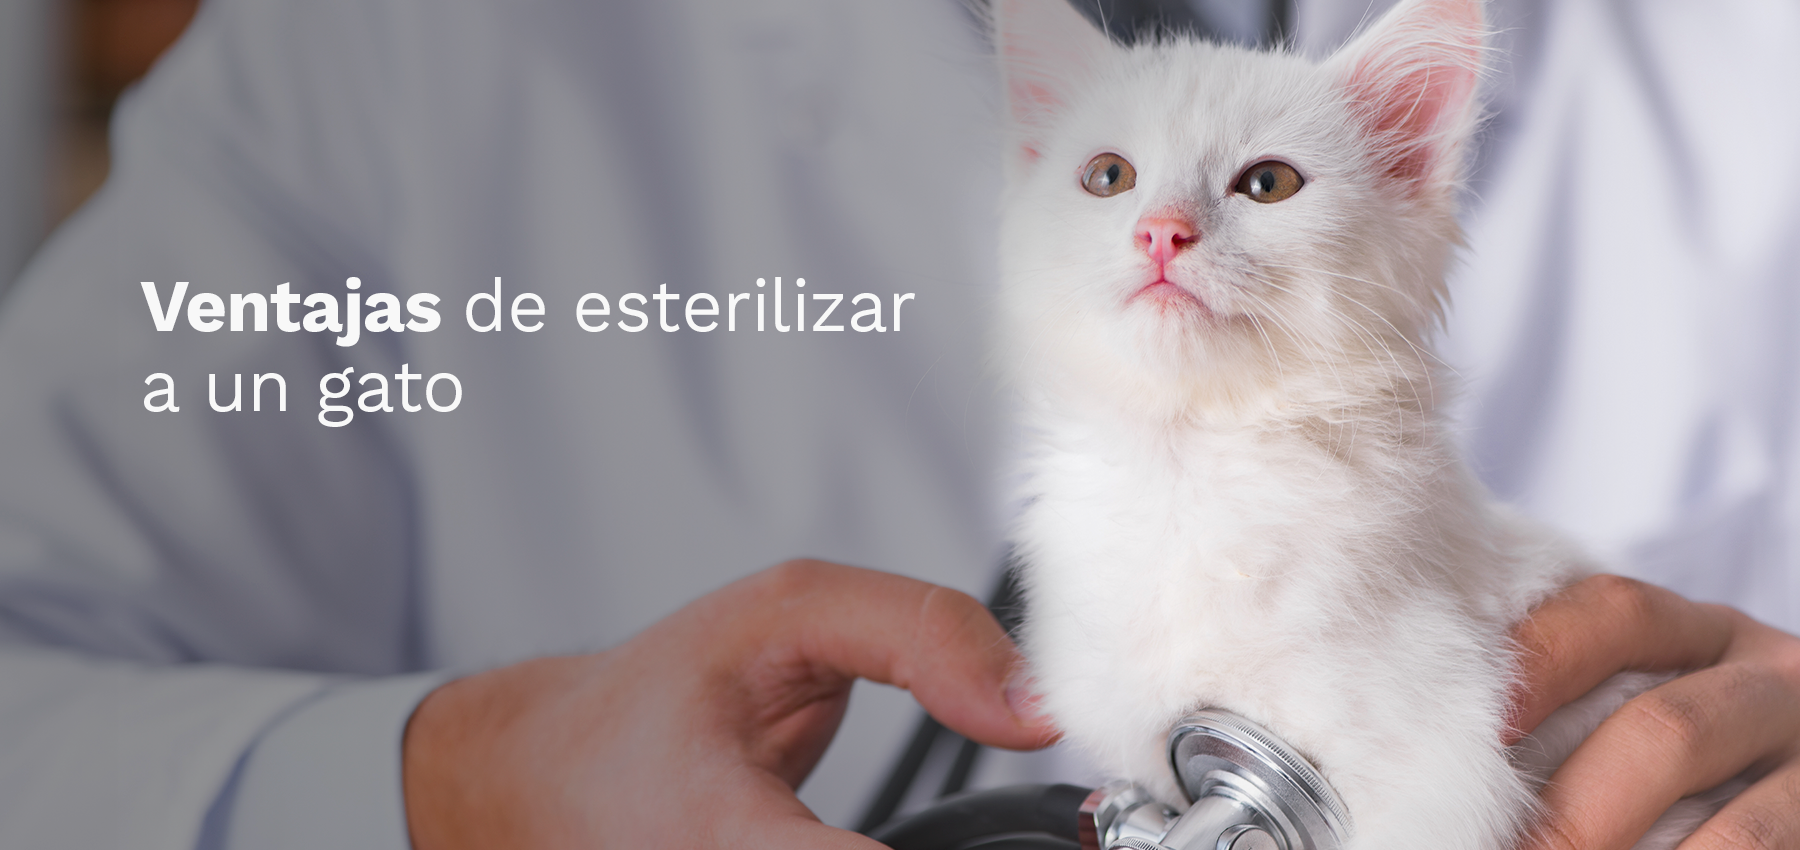 Ventajas de esterilizar a un gato